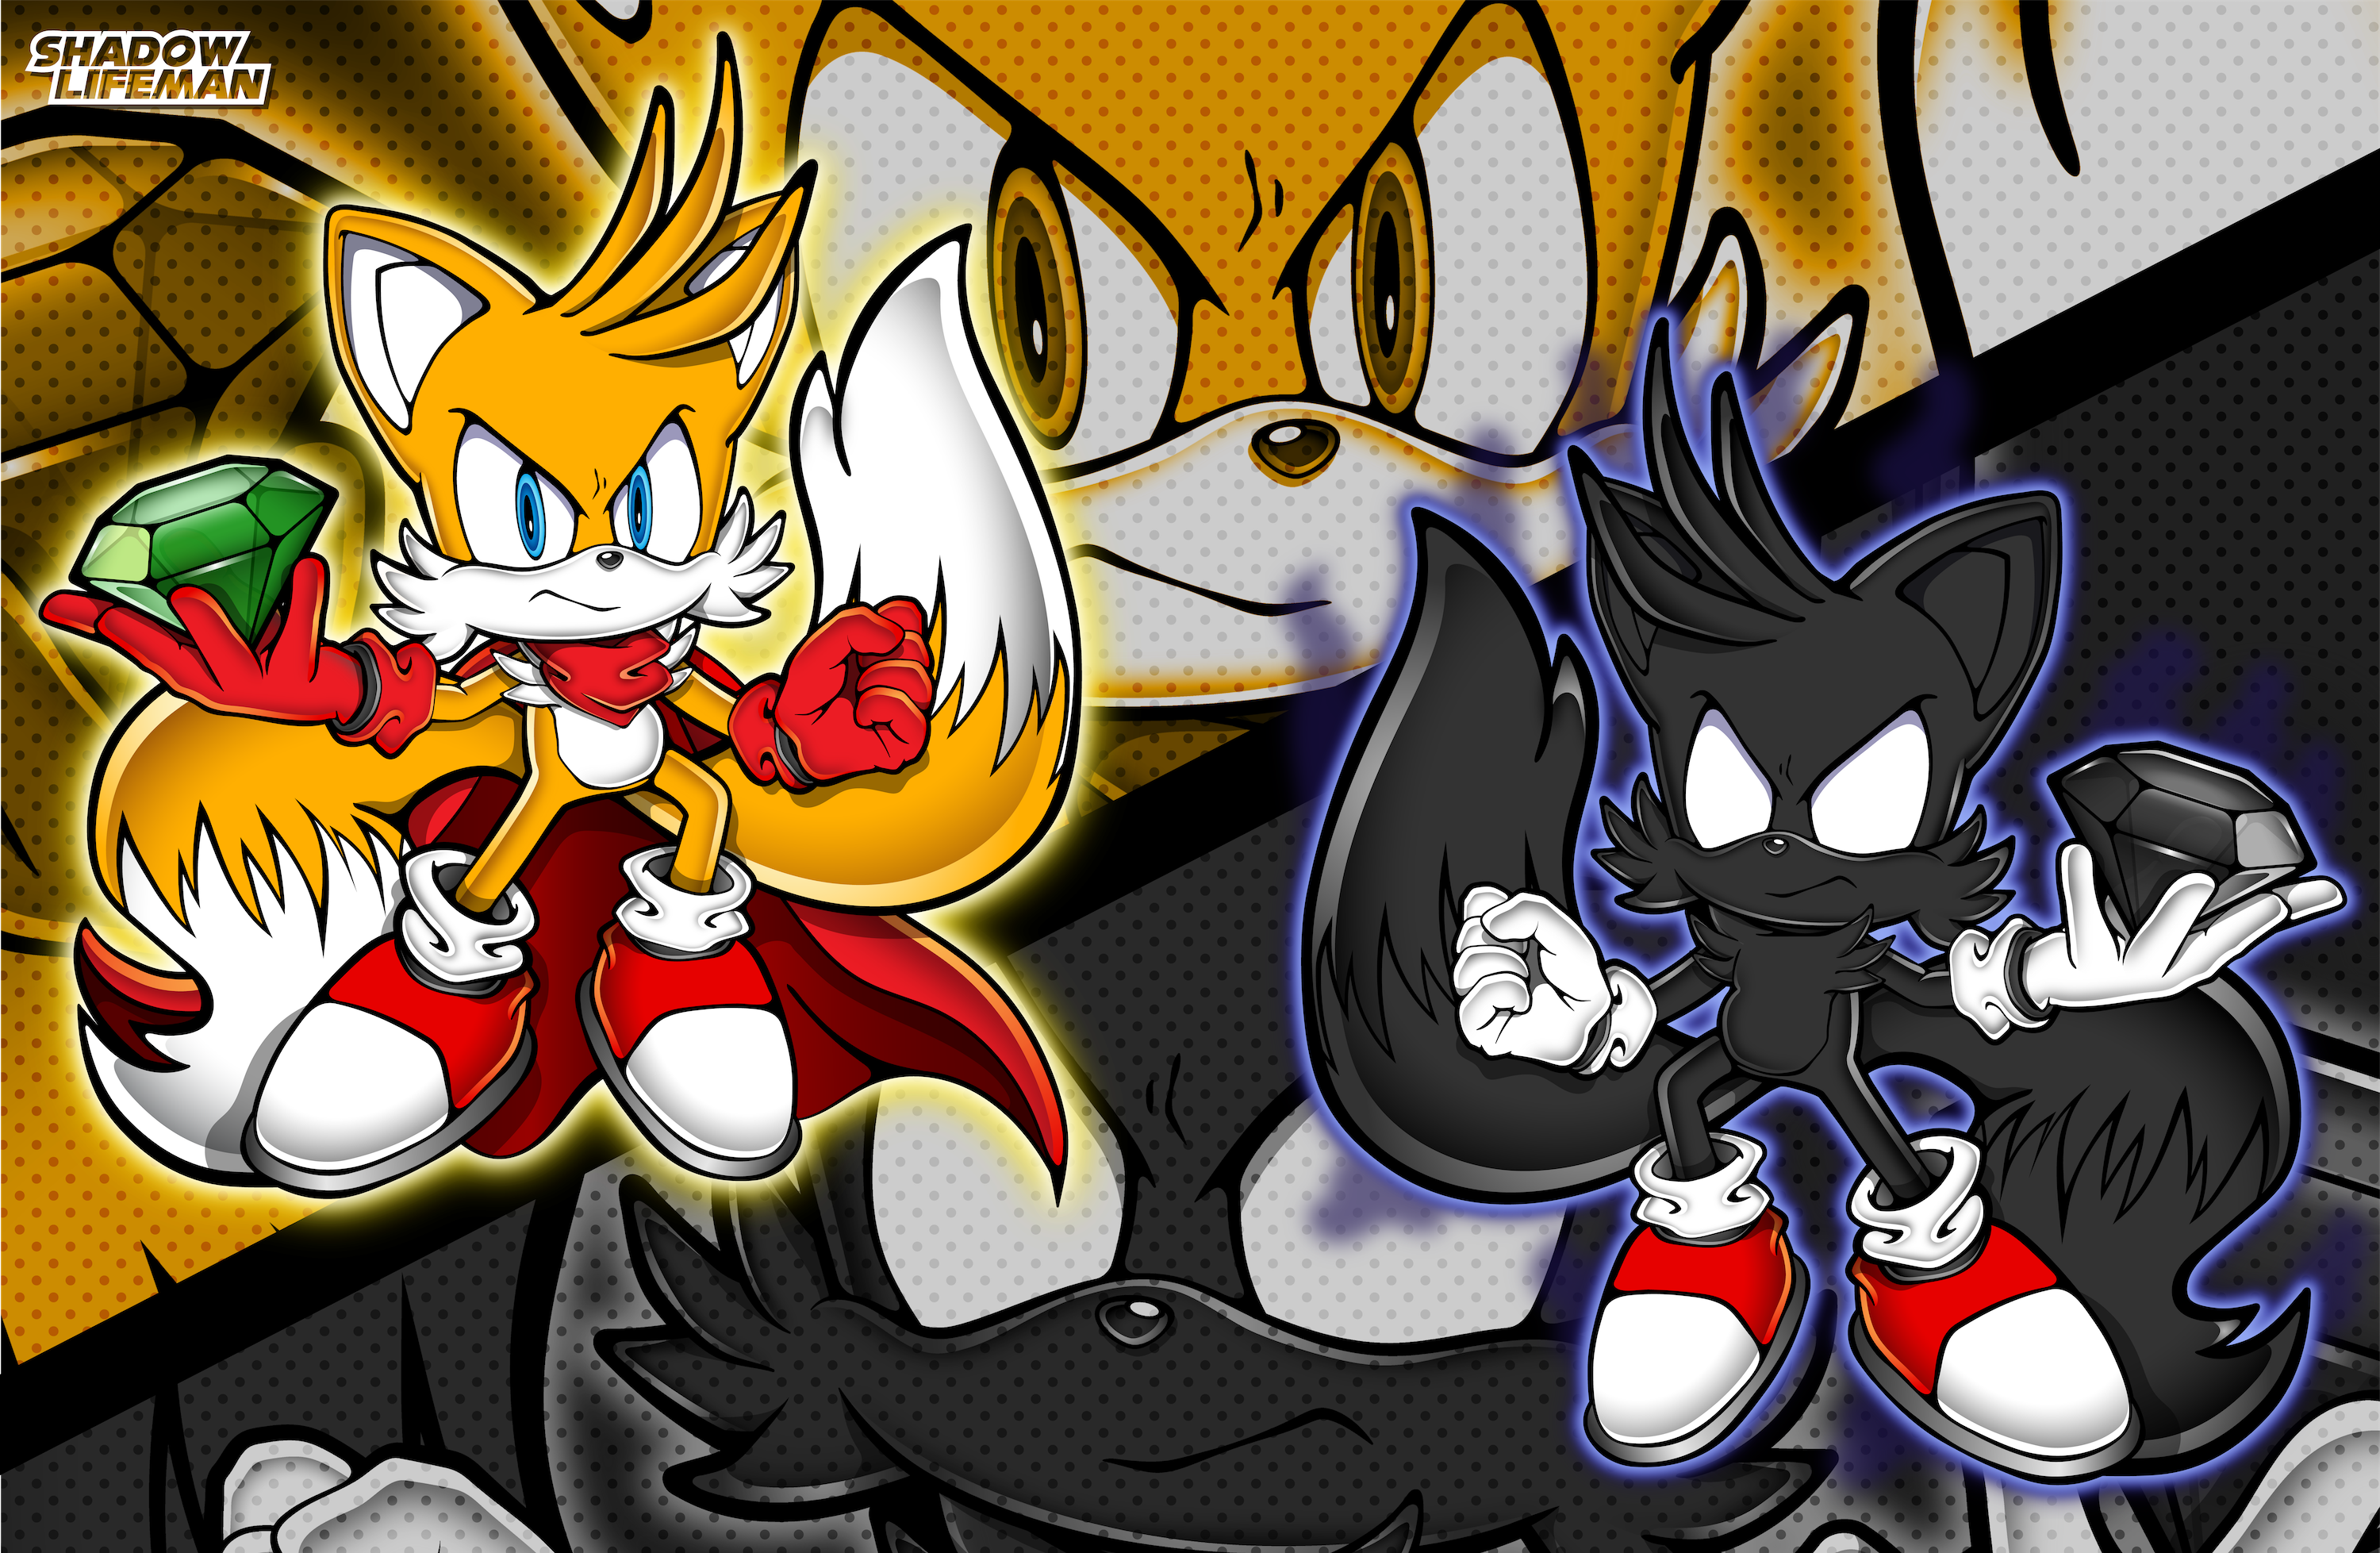 Sonic Channel - Super Tails - hker021 by ShadowLifeman on DeviantArt